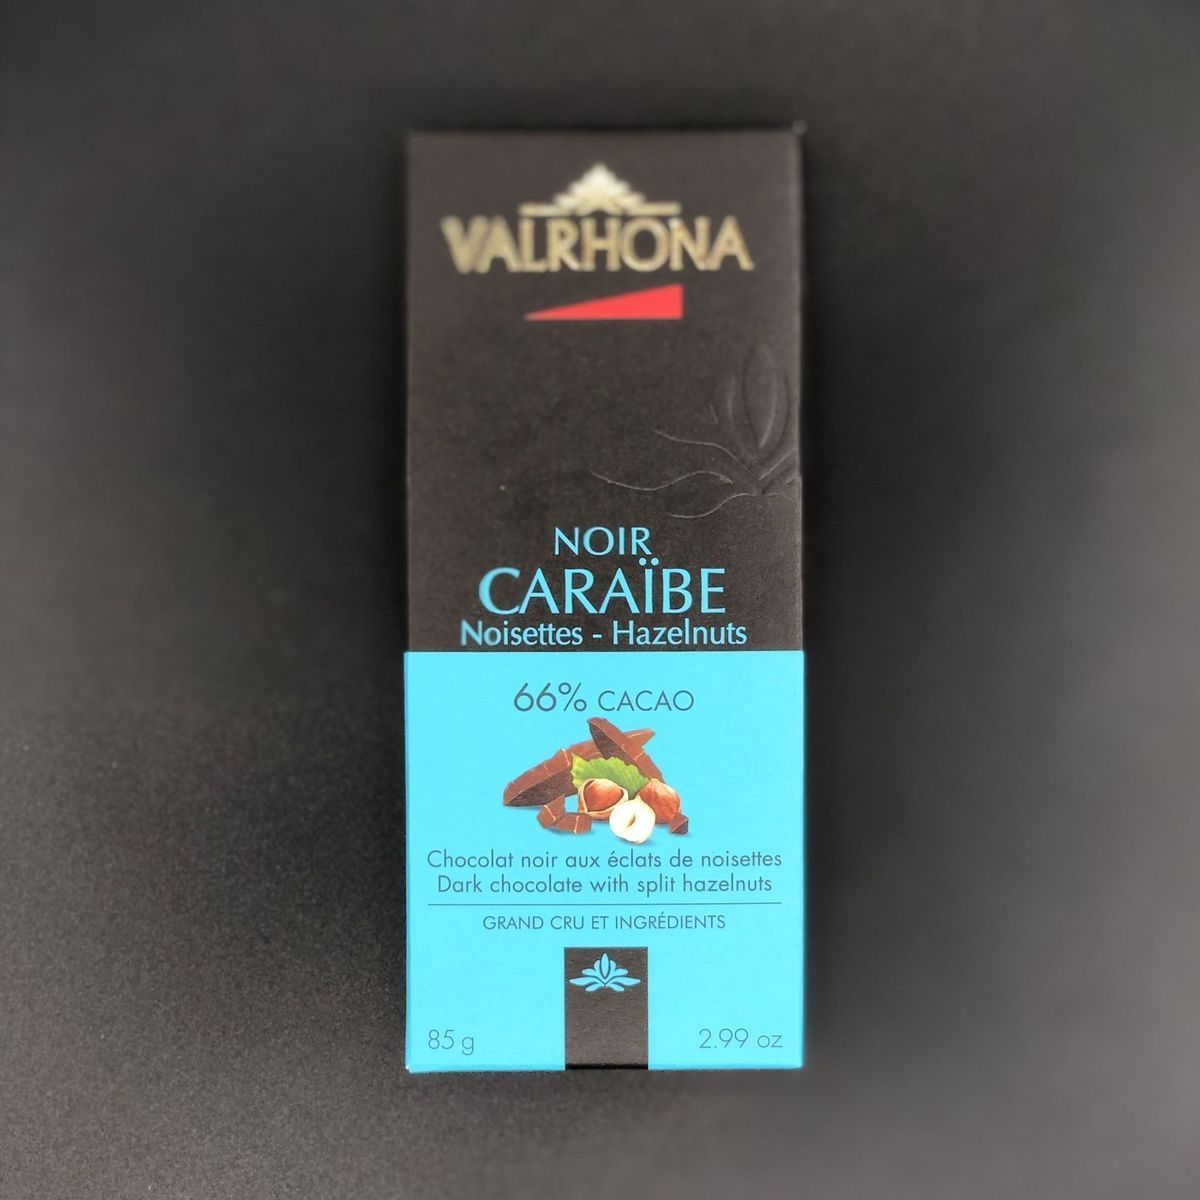 Шоколад Valrhona гран крю "Караиб с фундуком" (66%) 85г